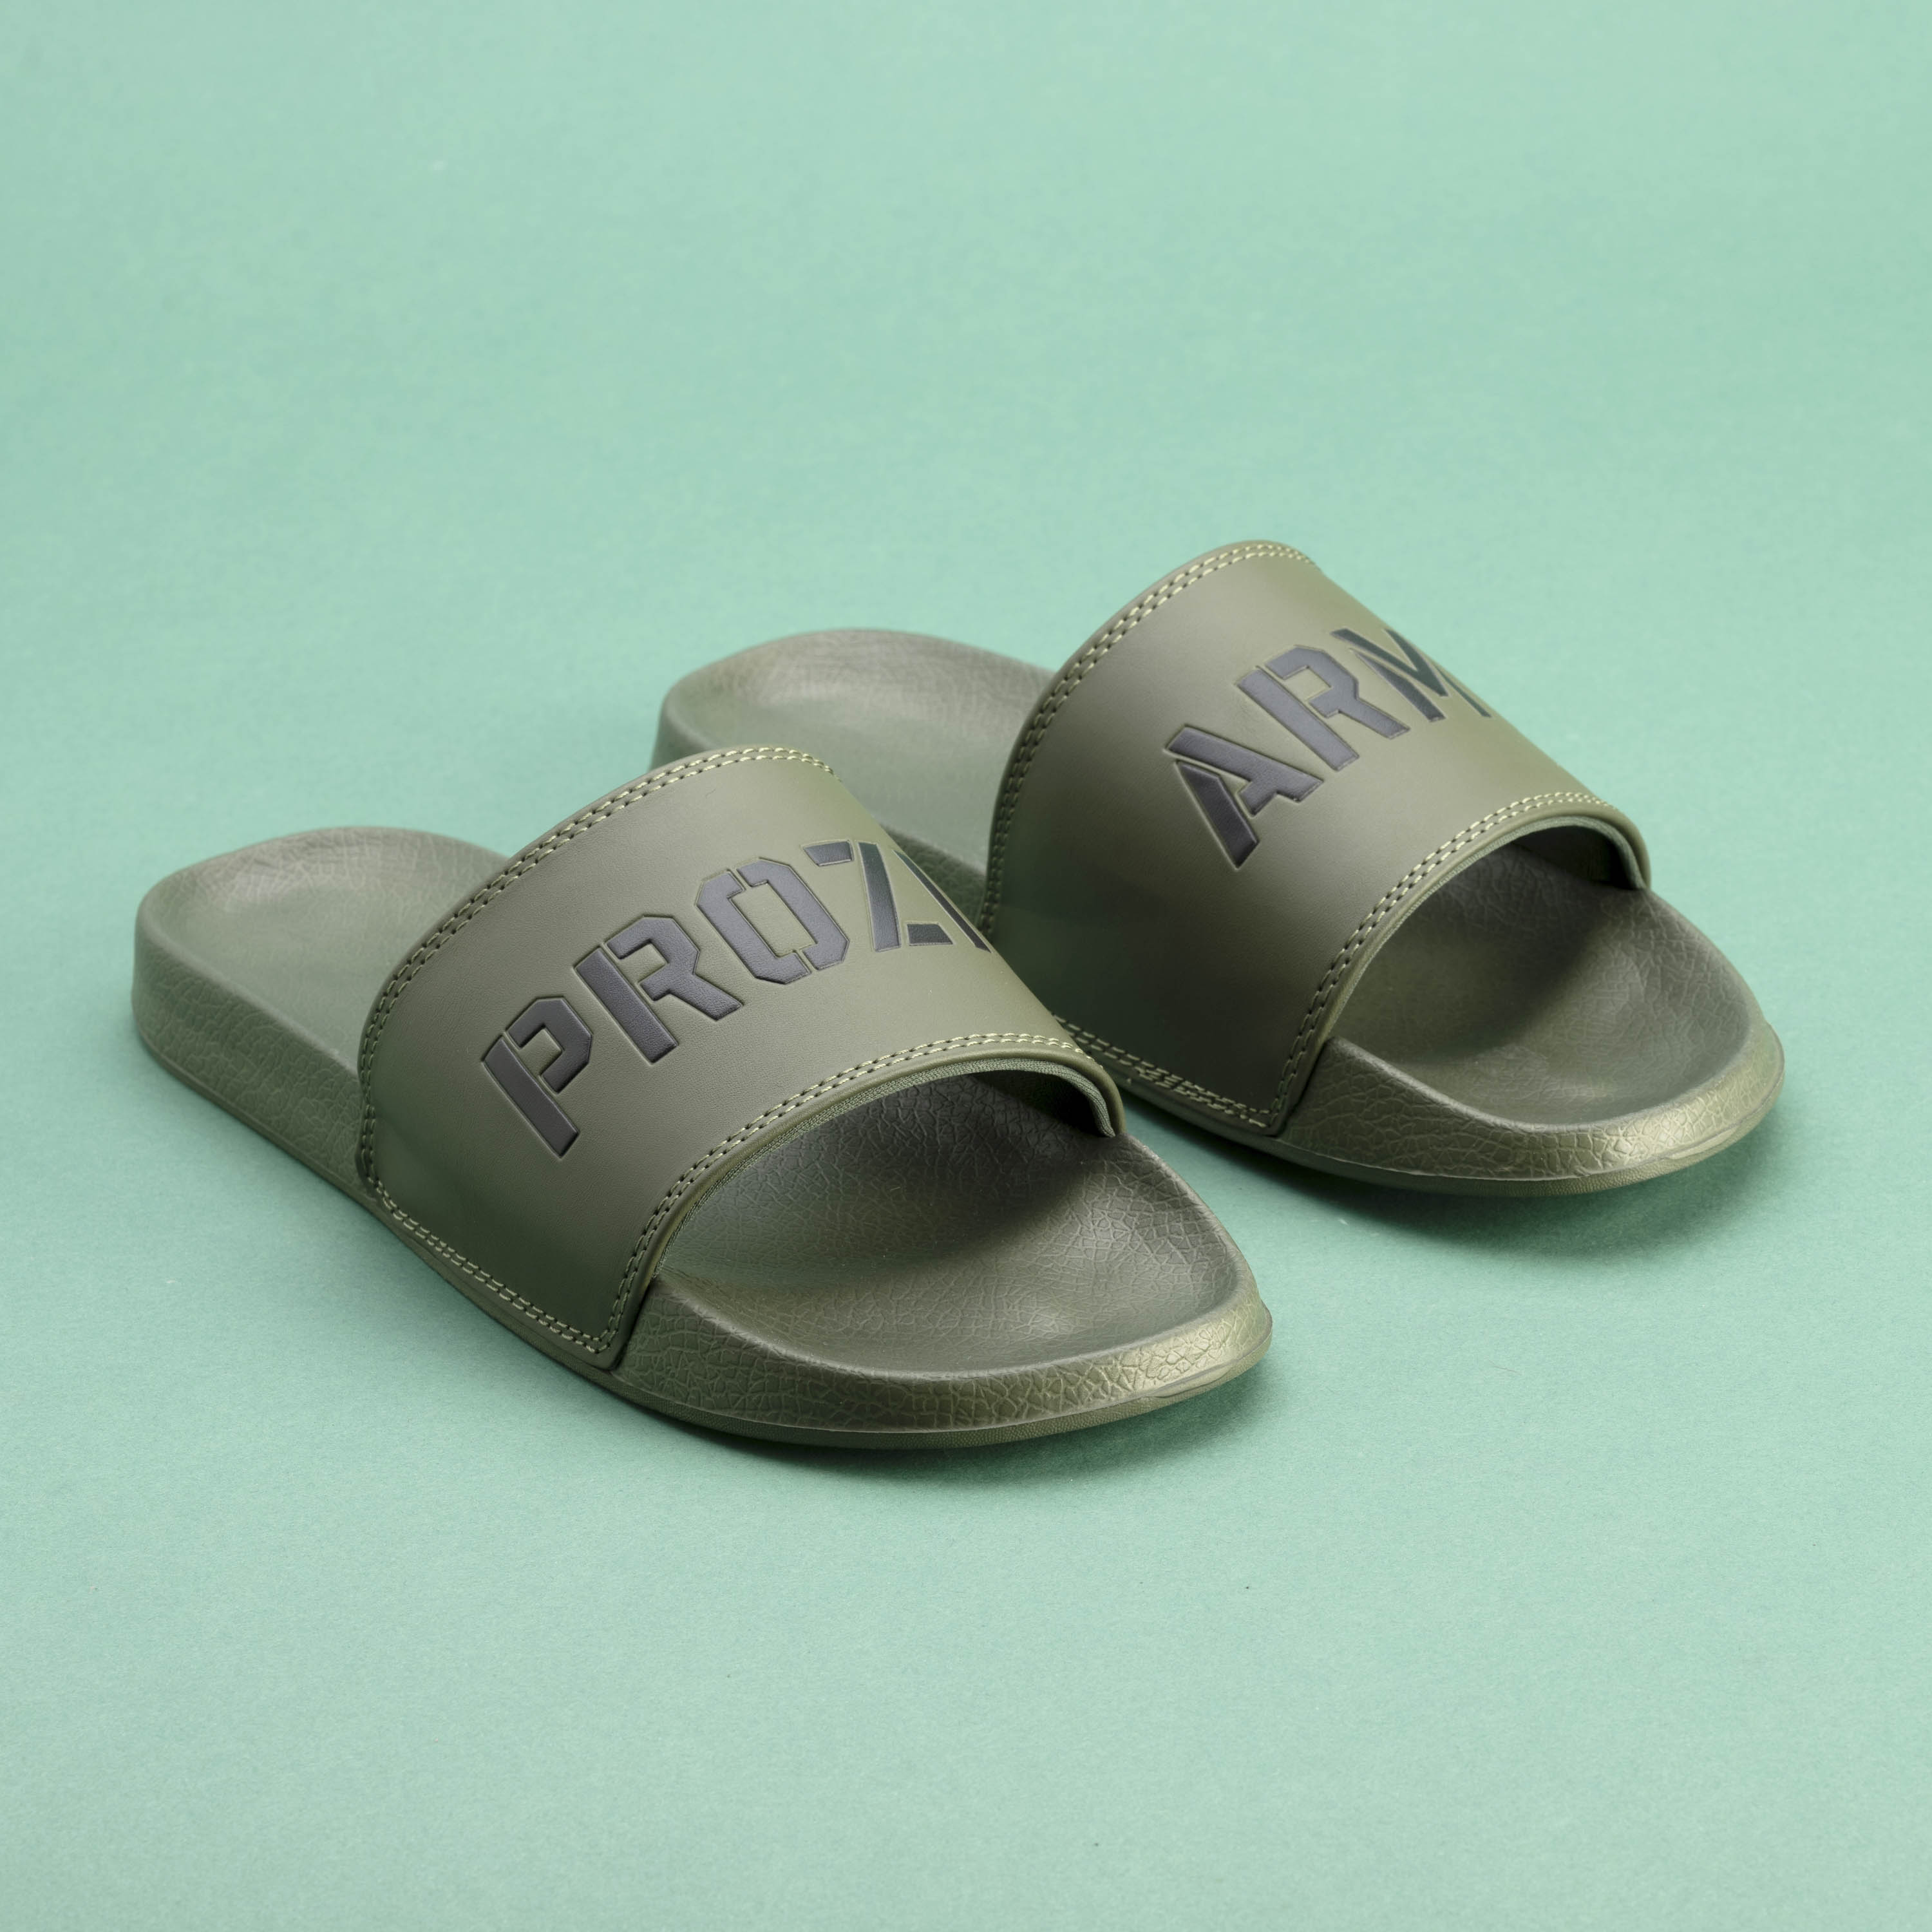 army sandal